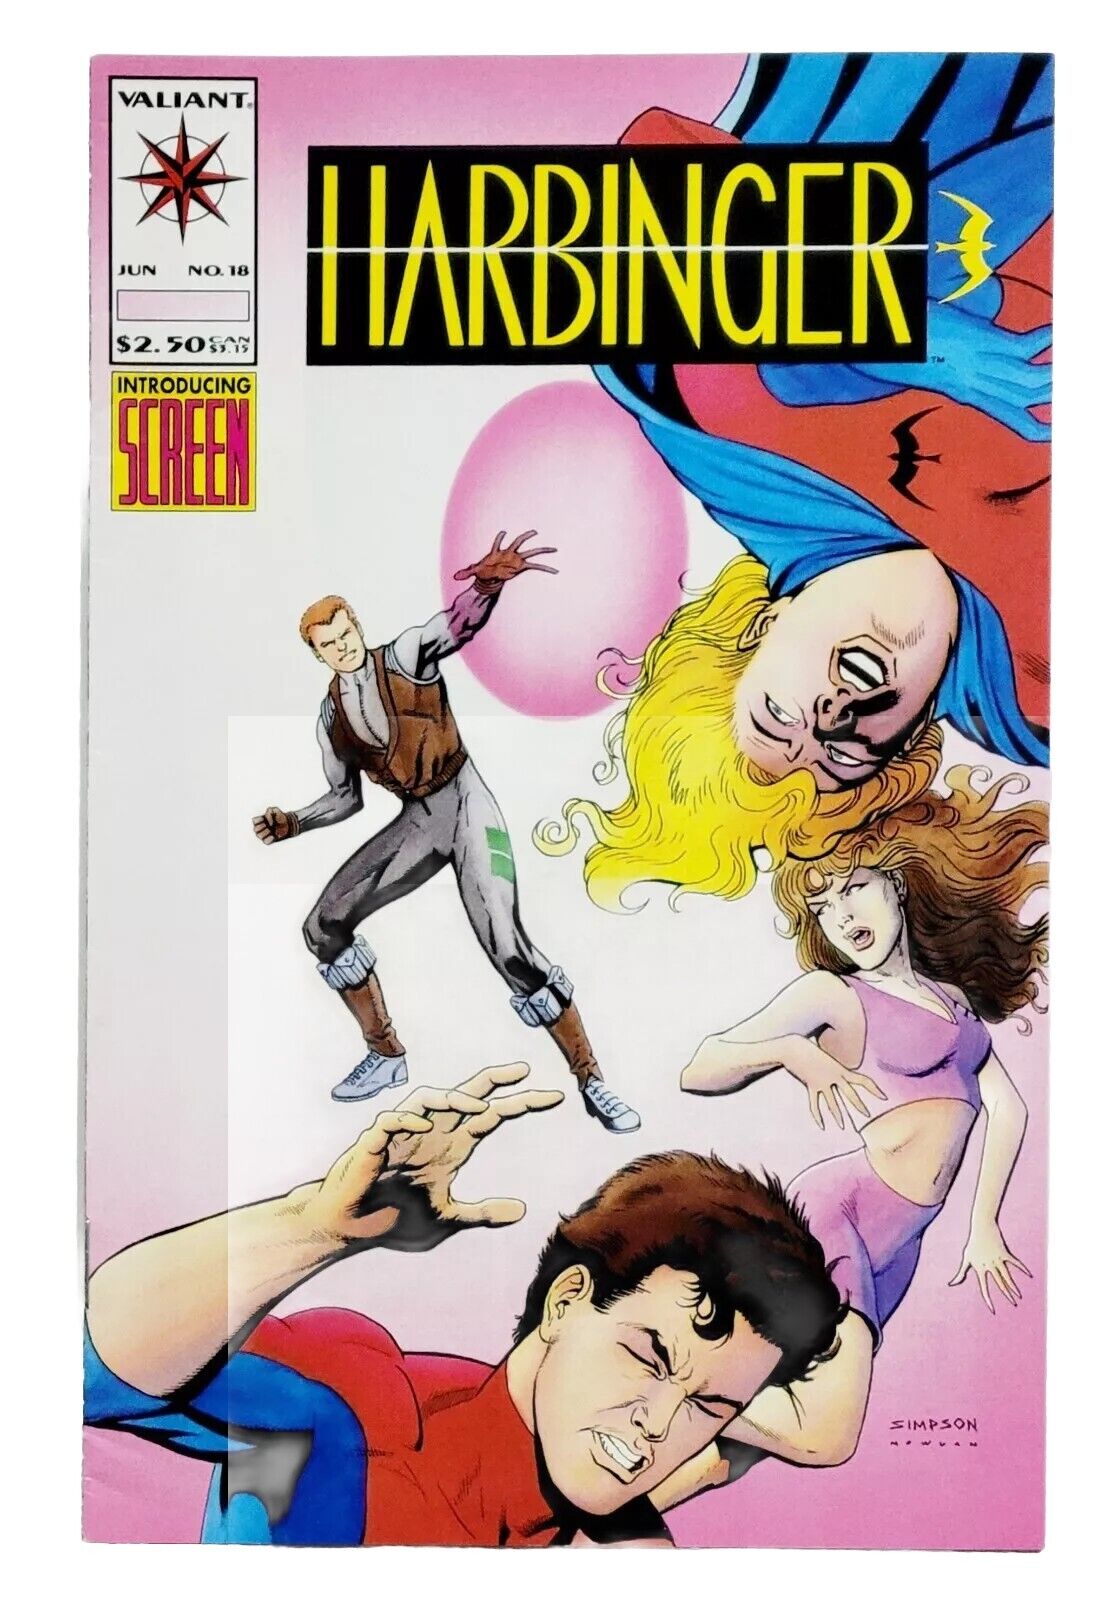 HARBINGER #18 - 1993 Valiant Comics 1st App of Screen - VGC